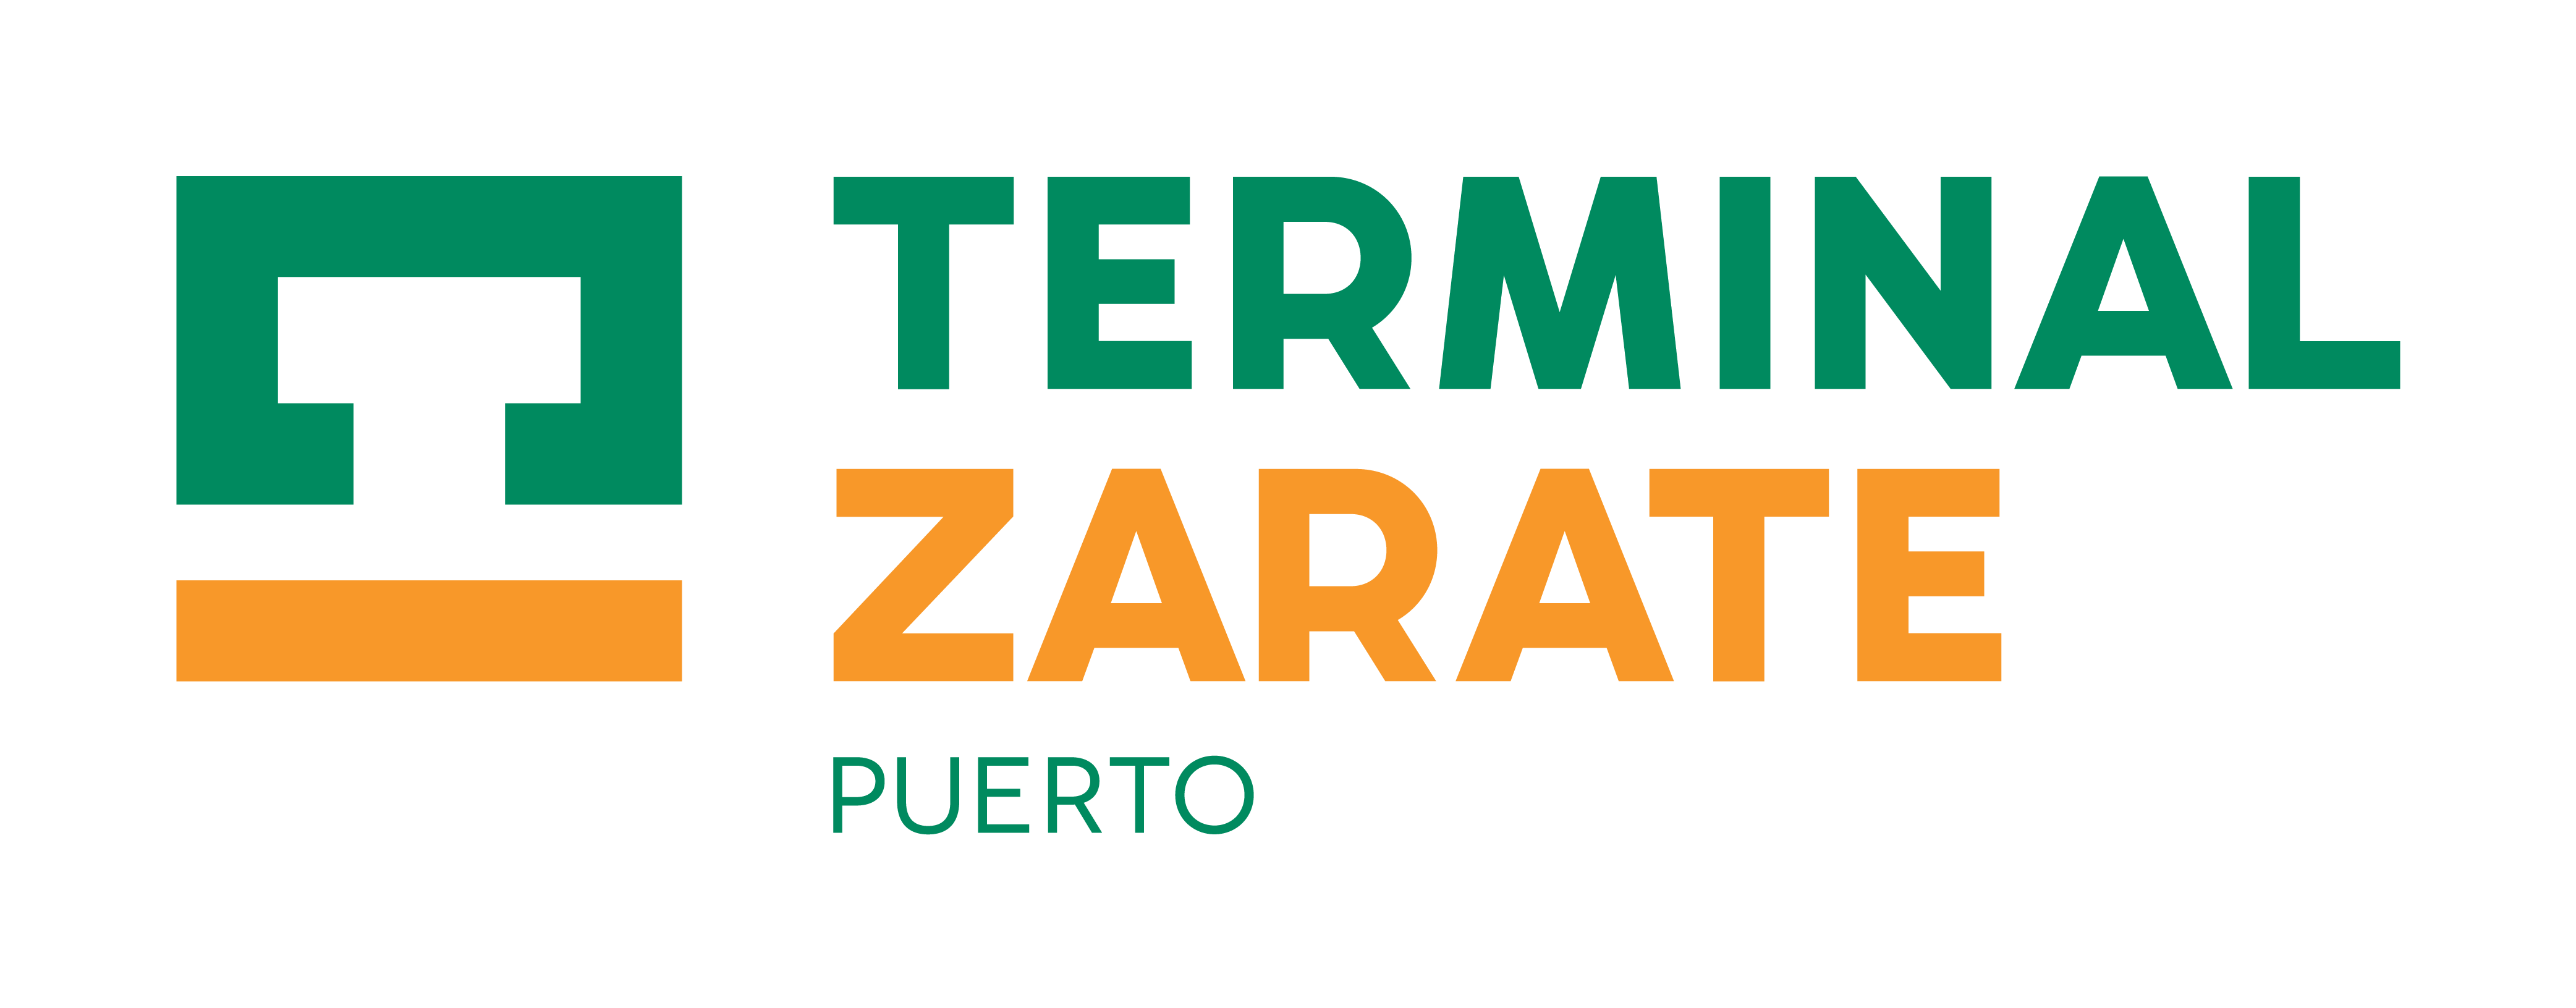 Terminal Zárate Puerto Logo Brand